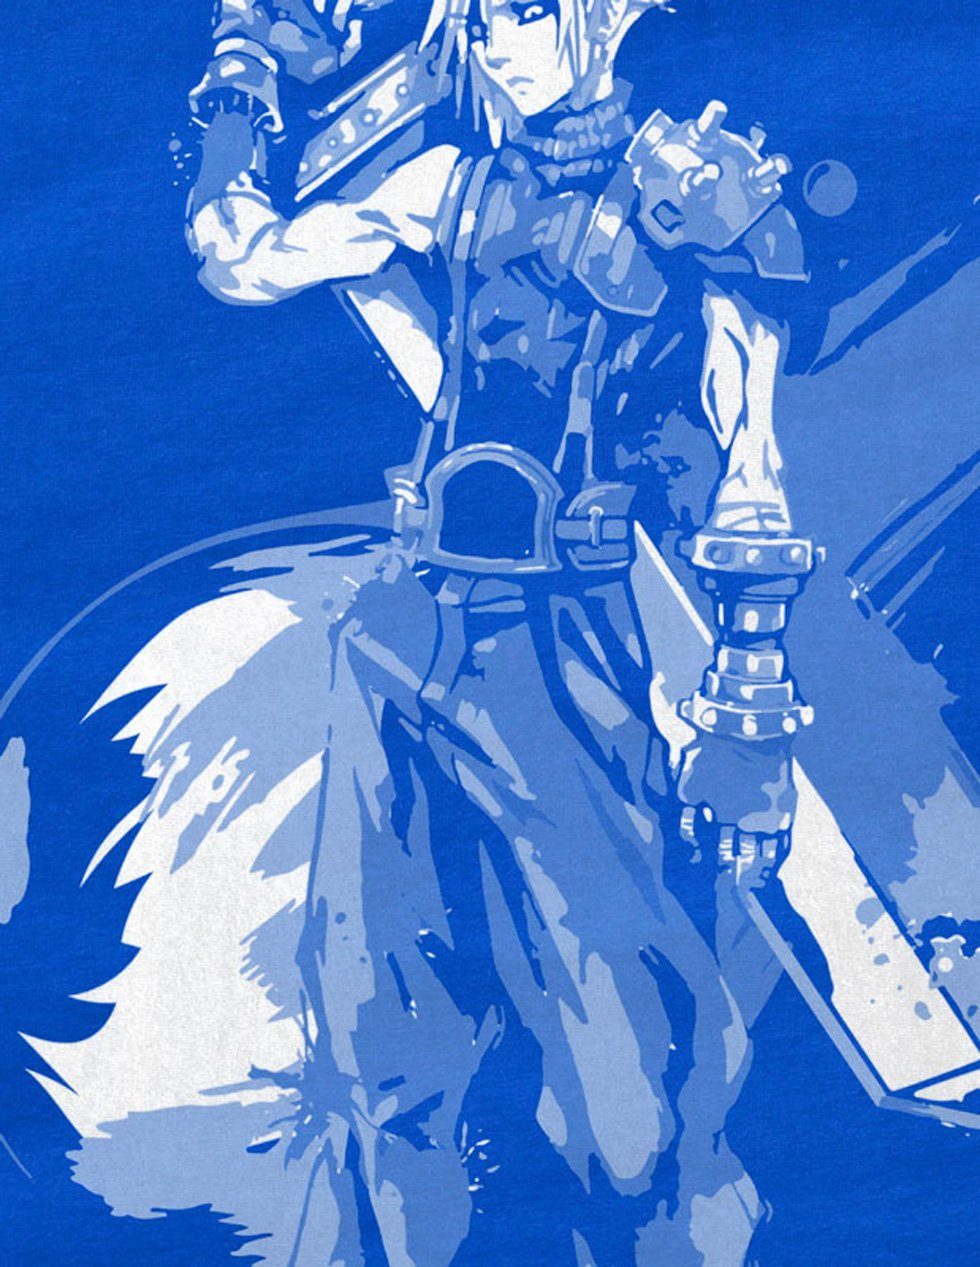 style3 Print-Shirt Herren T-Shirt Cloud chocobo blau 7 sephiroth VII final Strife